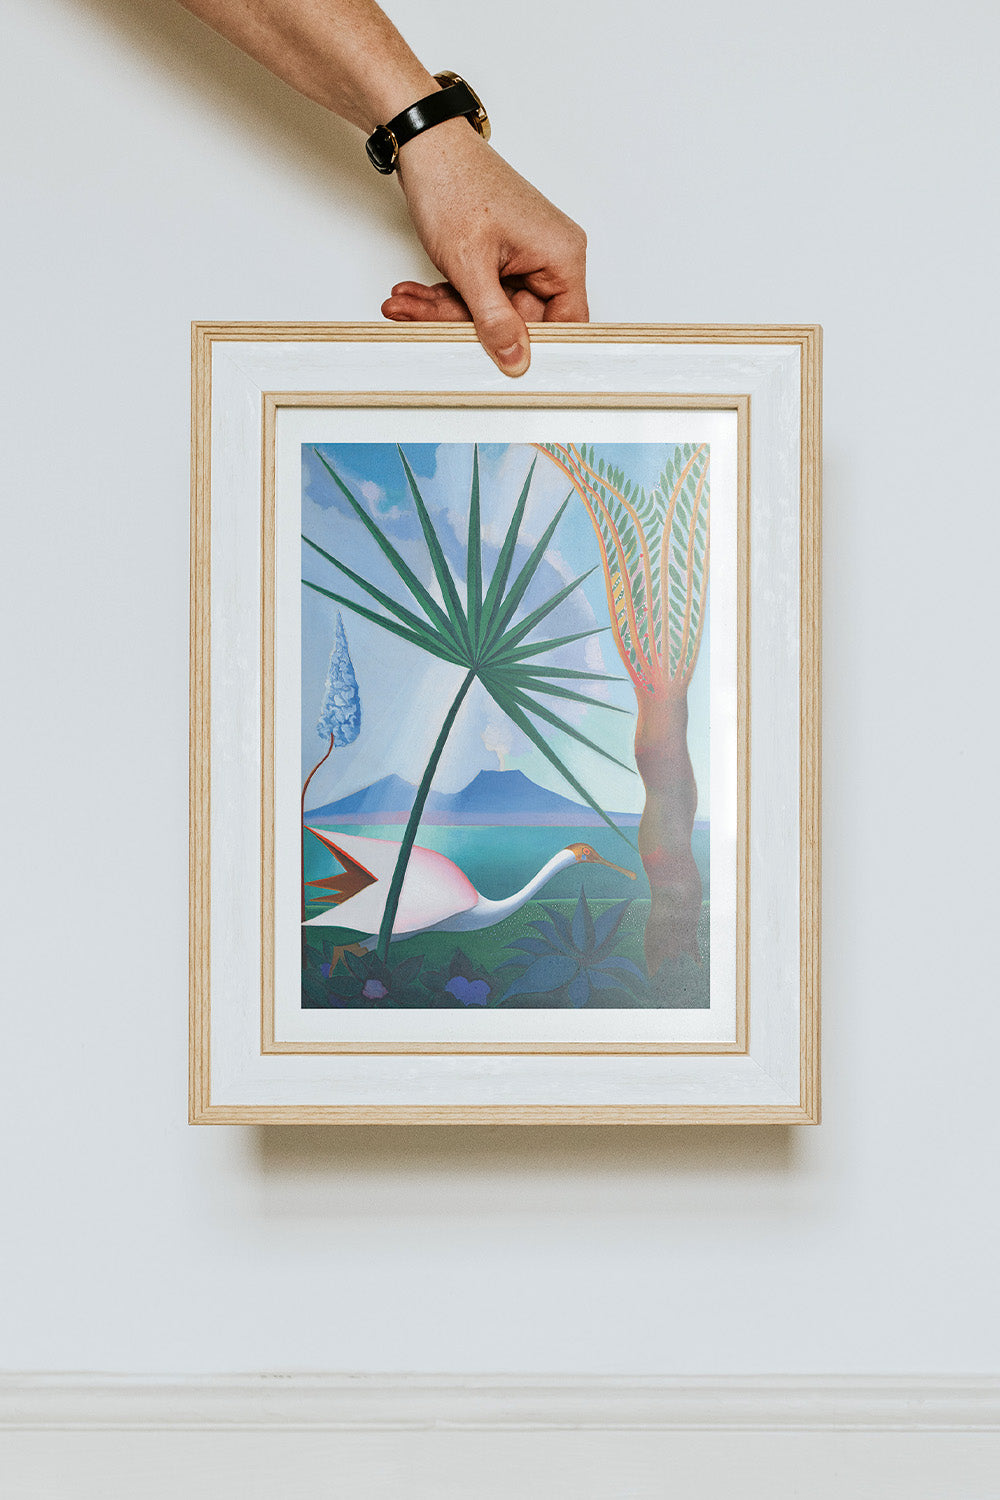 Joseph Stella's Neapolitan Song art print with bold blue backdrop, green palmetto leaf, and bird.